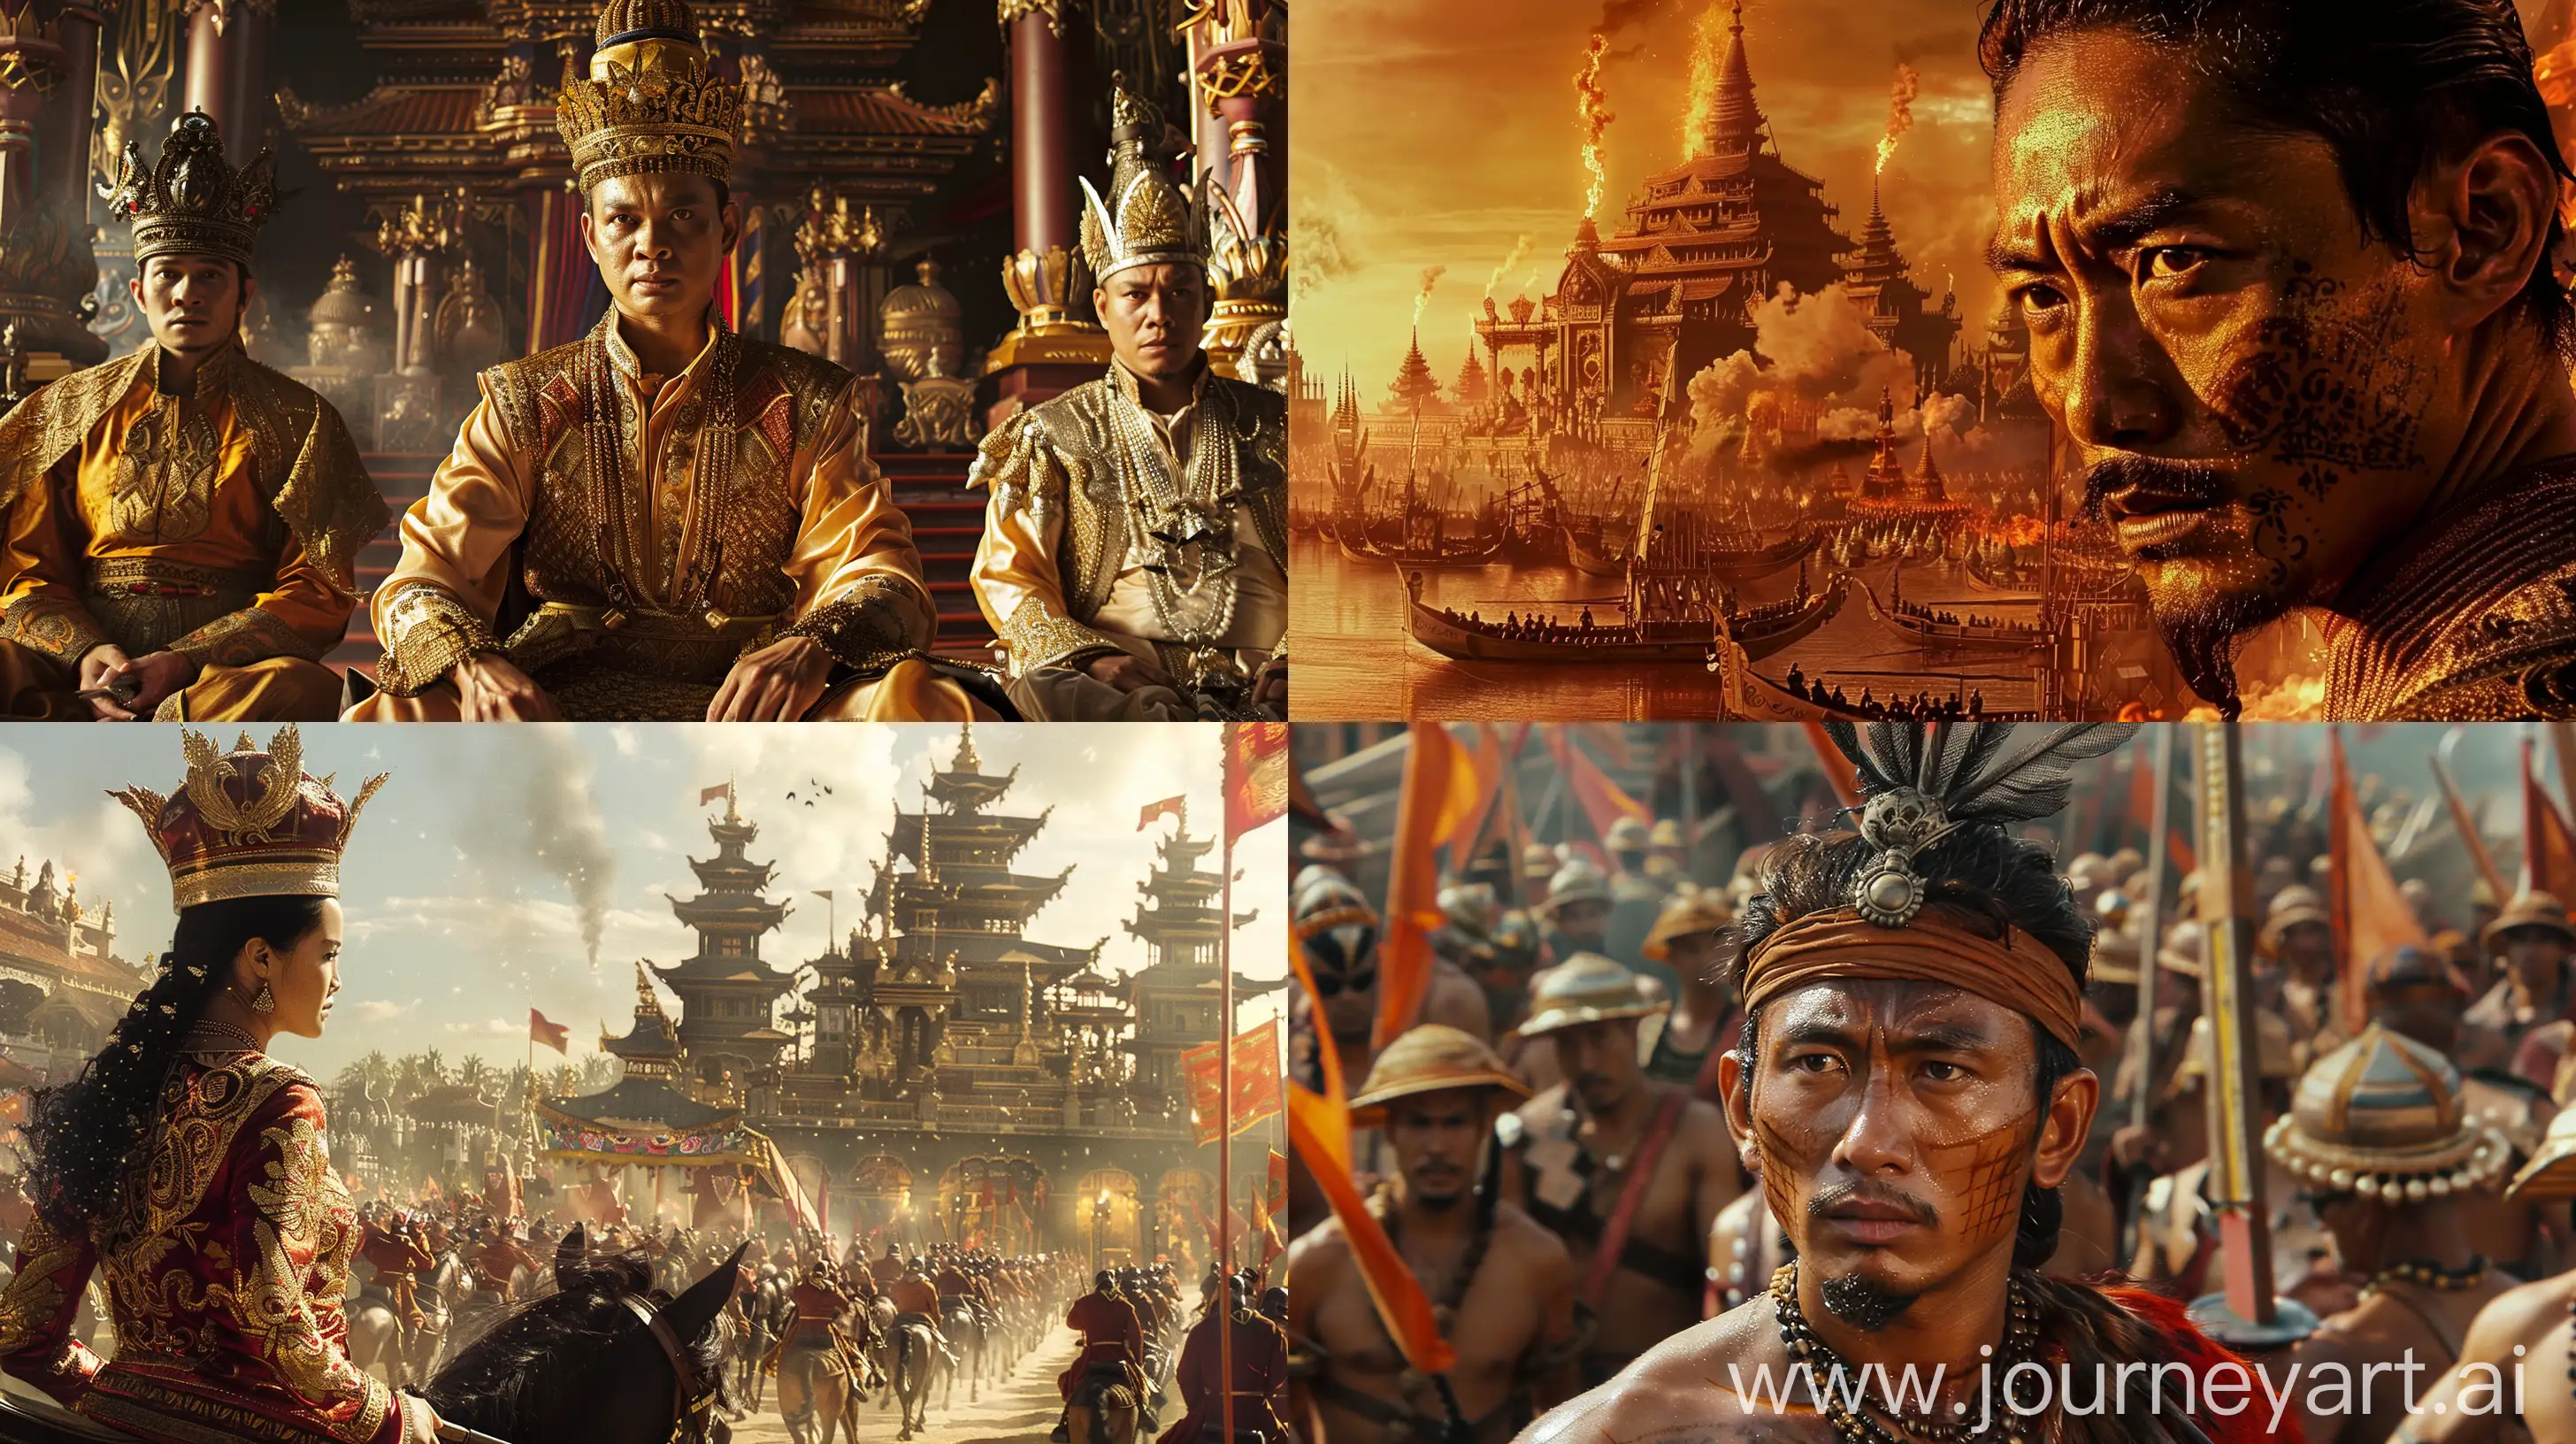 Movie indonesia poster : atmosphere mataram sultanate kingdom, nice detail, -- v6 --ar 16:9